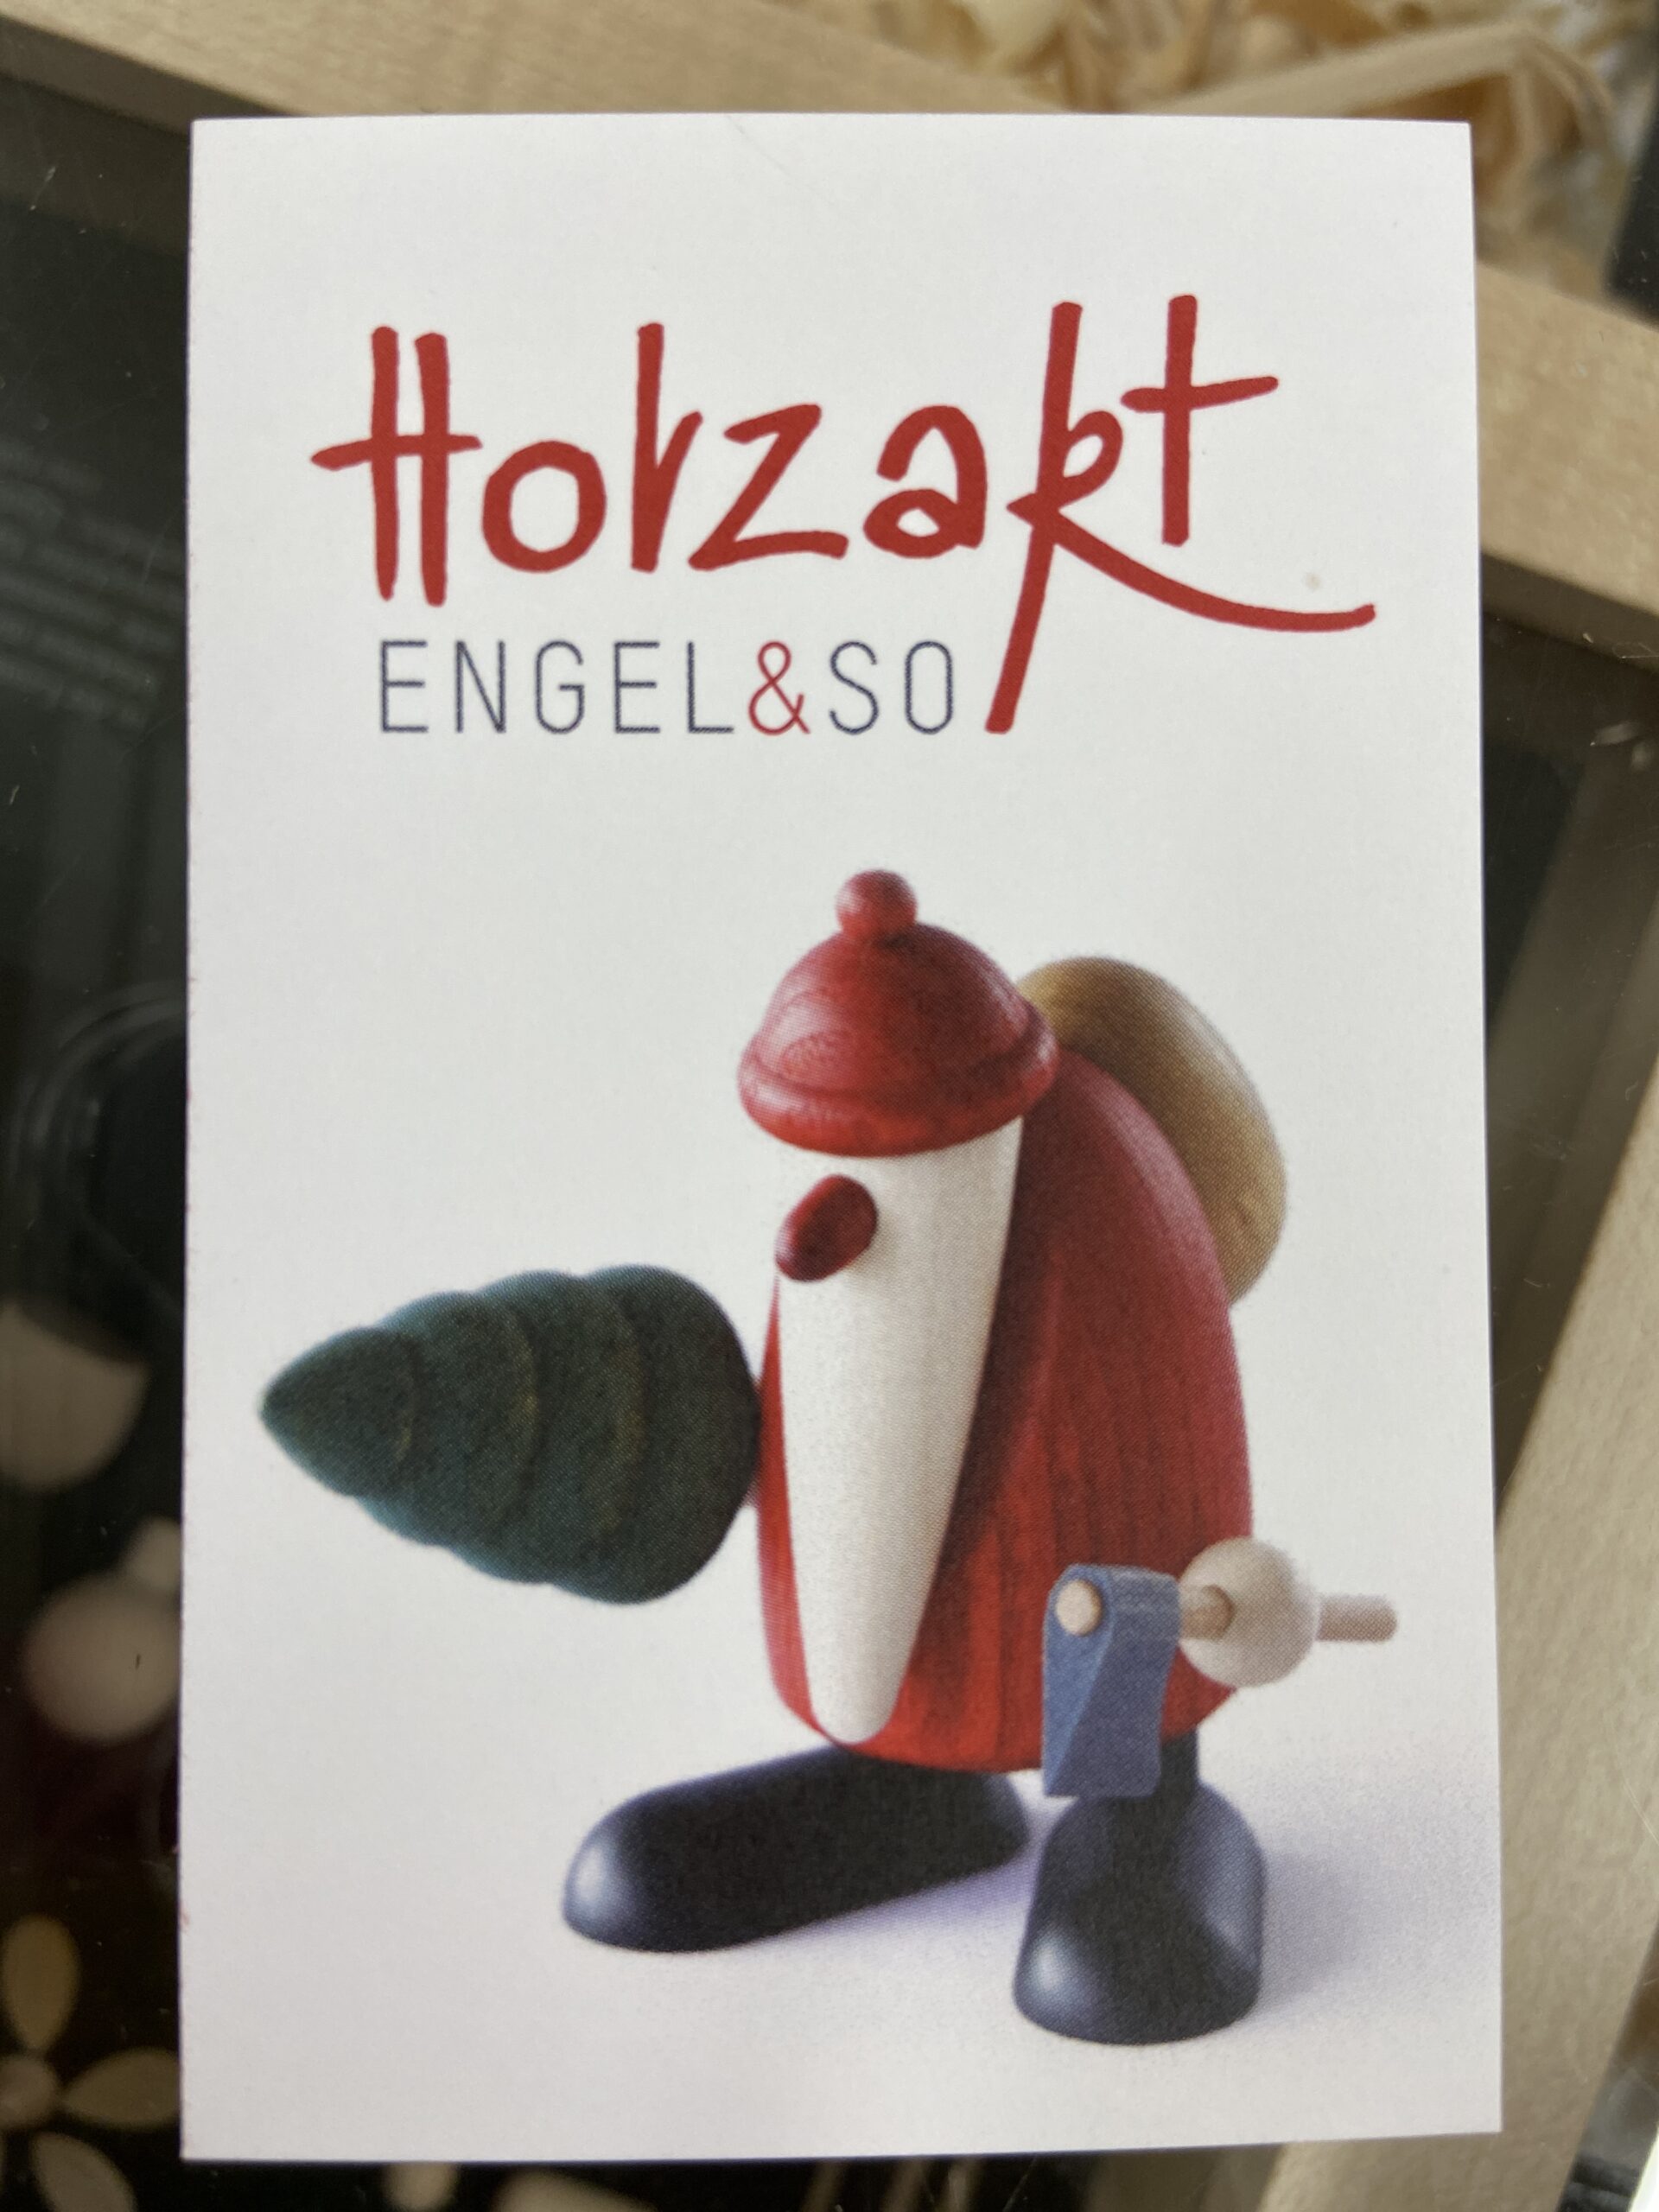 HolzArt Engel & so